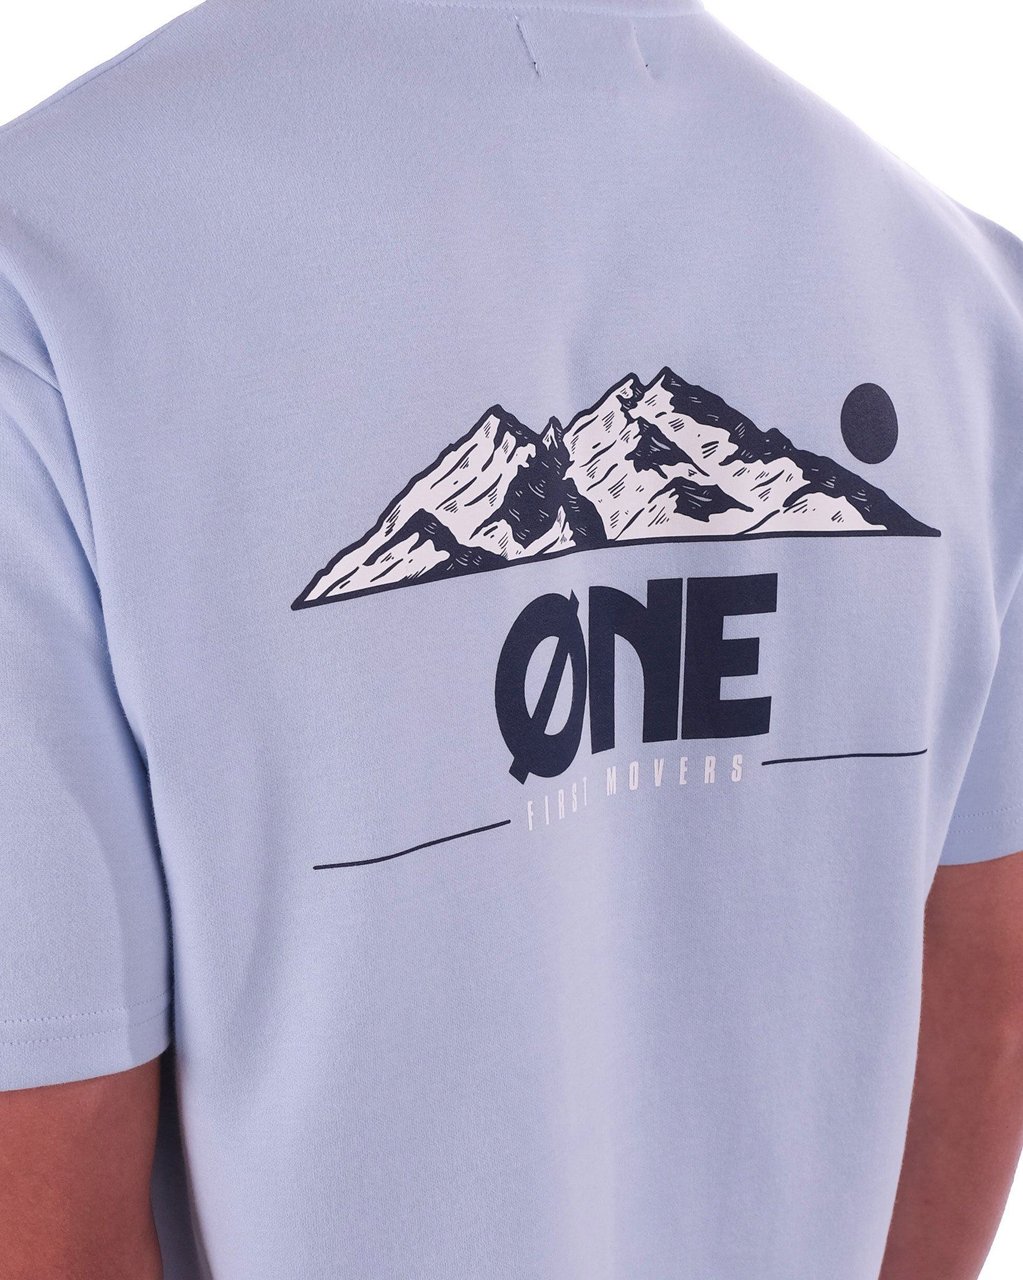 Øne First Movers T-Shirt Mountain Backpiece BabyBlue Blauw